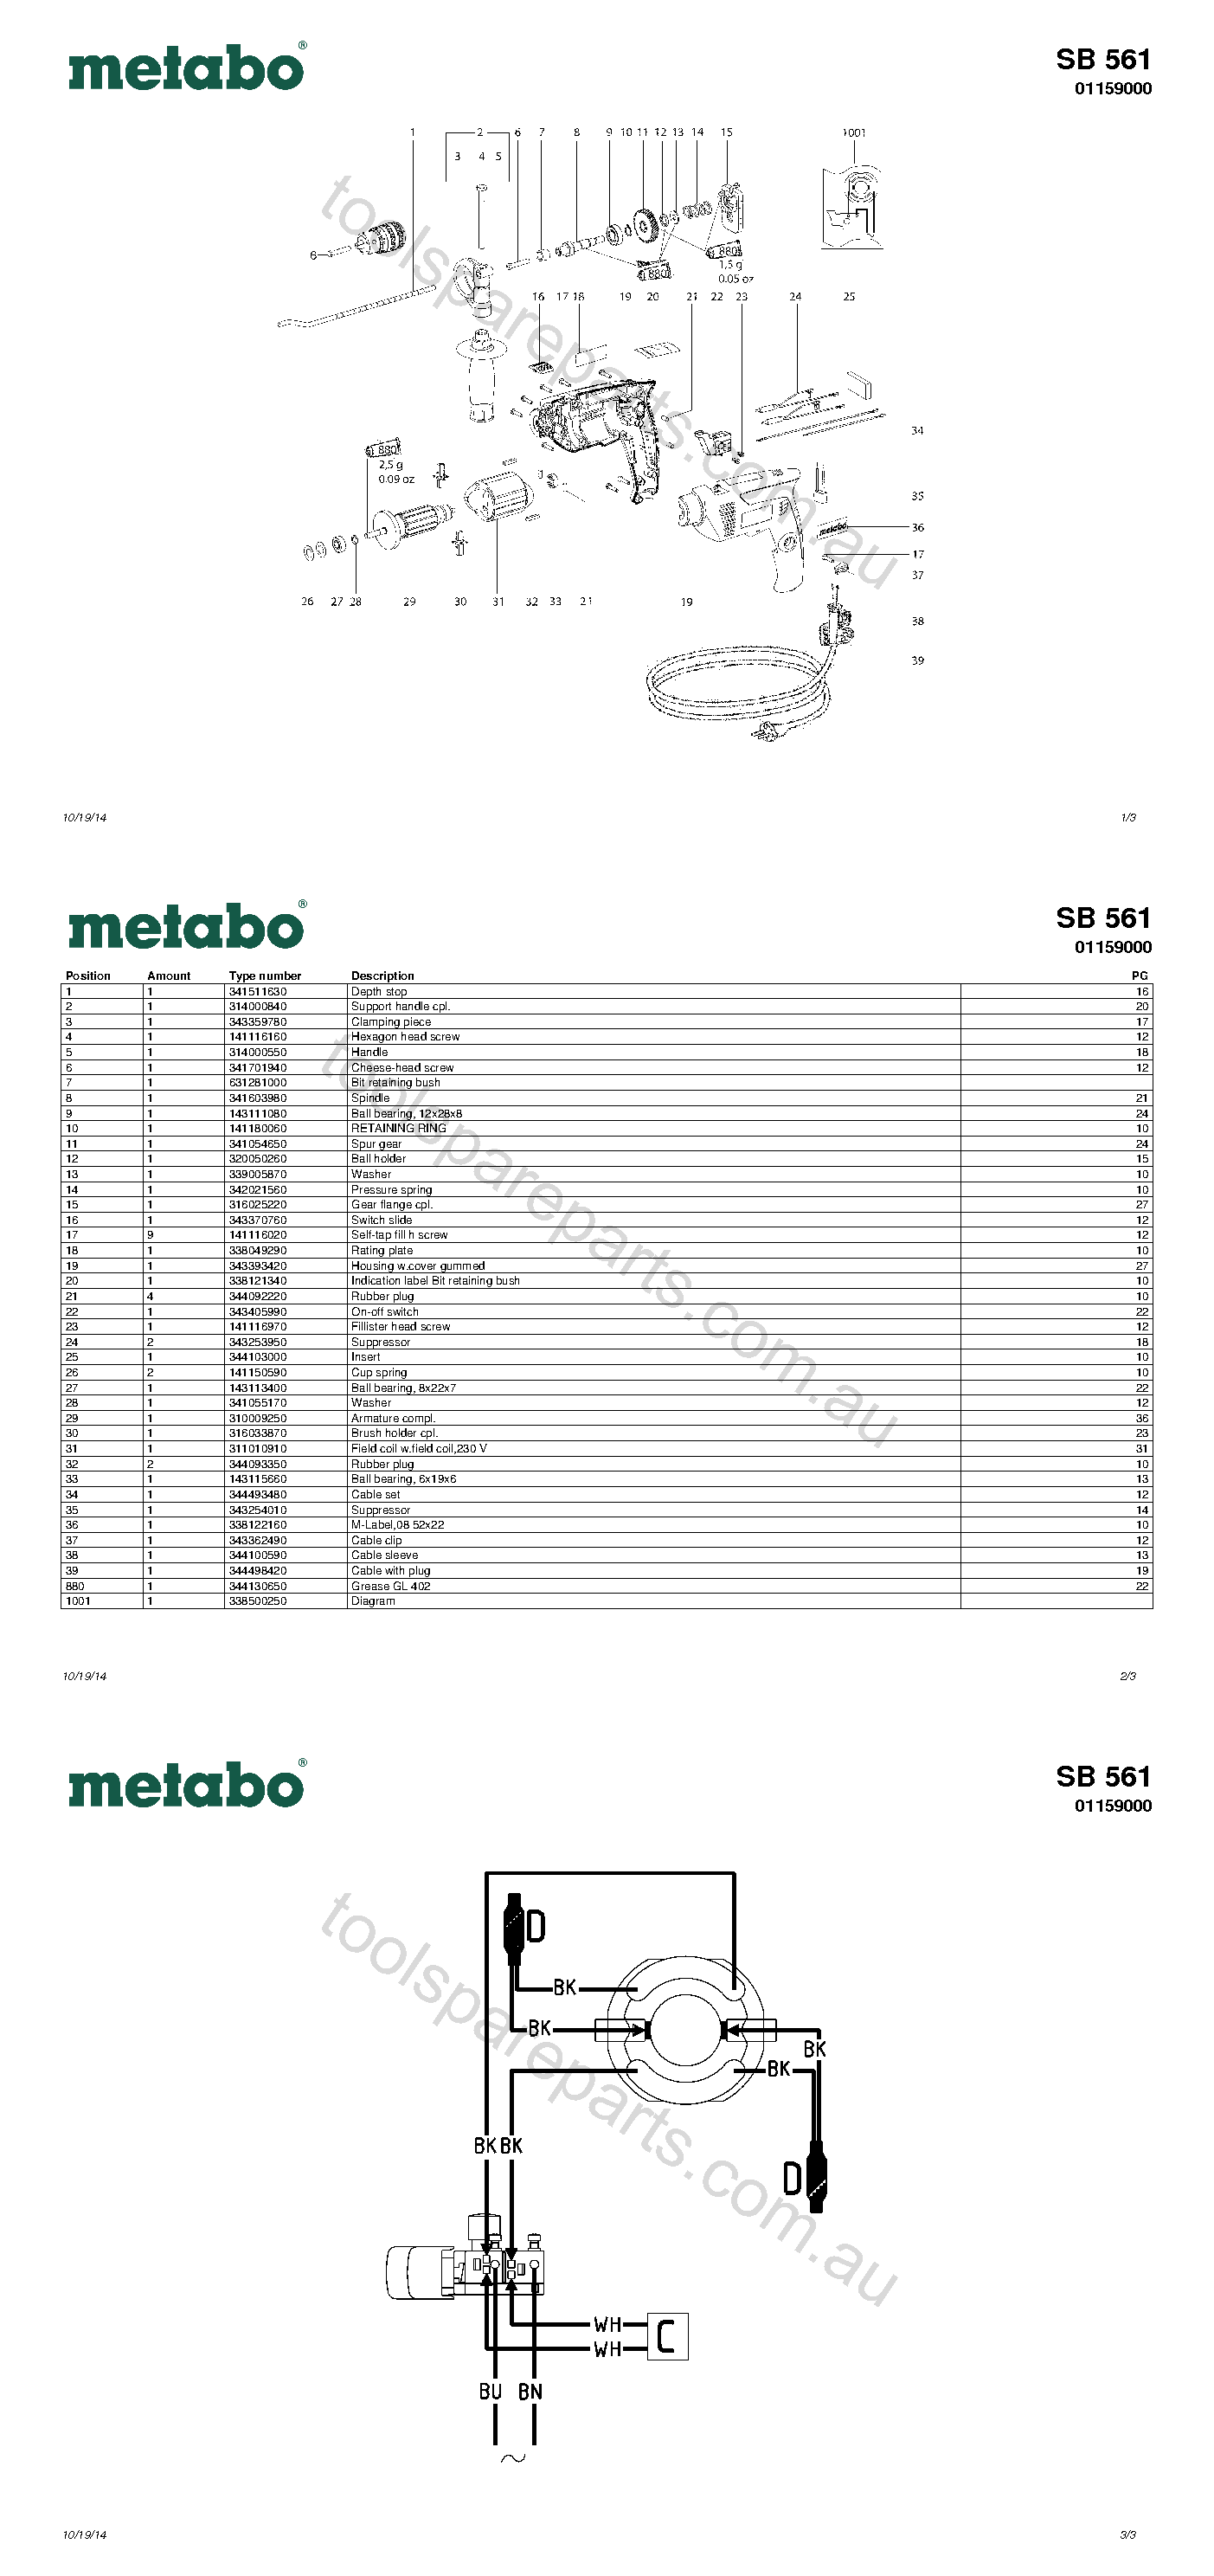 Metabo SB 561 01159000  Diagram 1